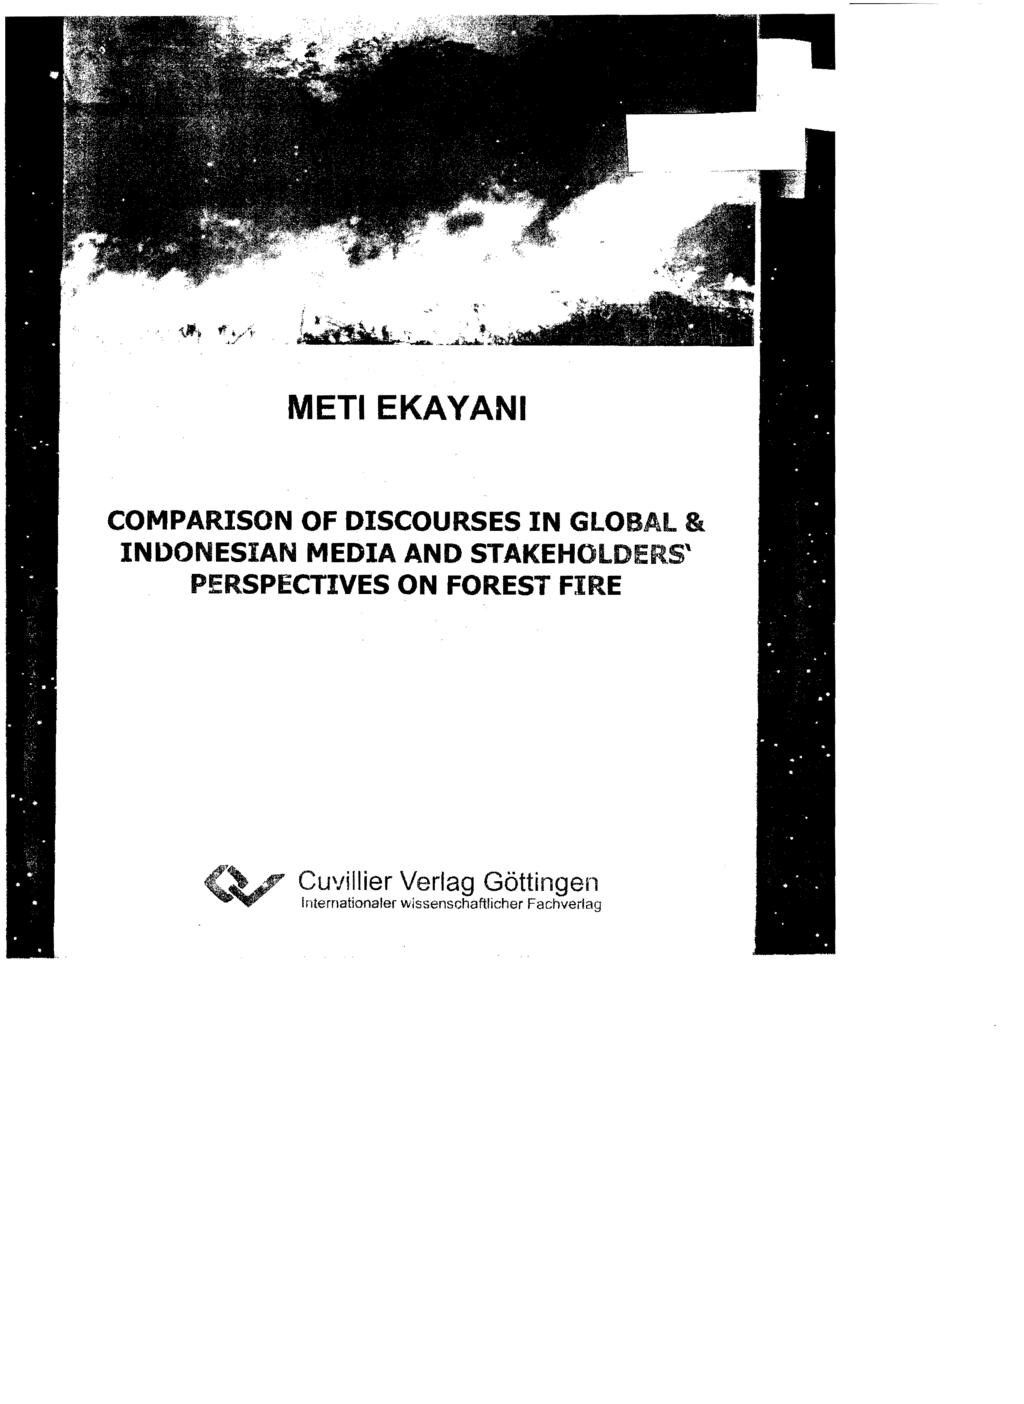 METI EKAYANI COMPARISON OF DISCOURSES IN GLOBAL & INDONESIAN MEDIA AND STAKEHOLDERS'